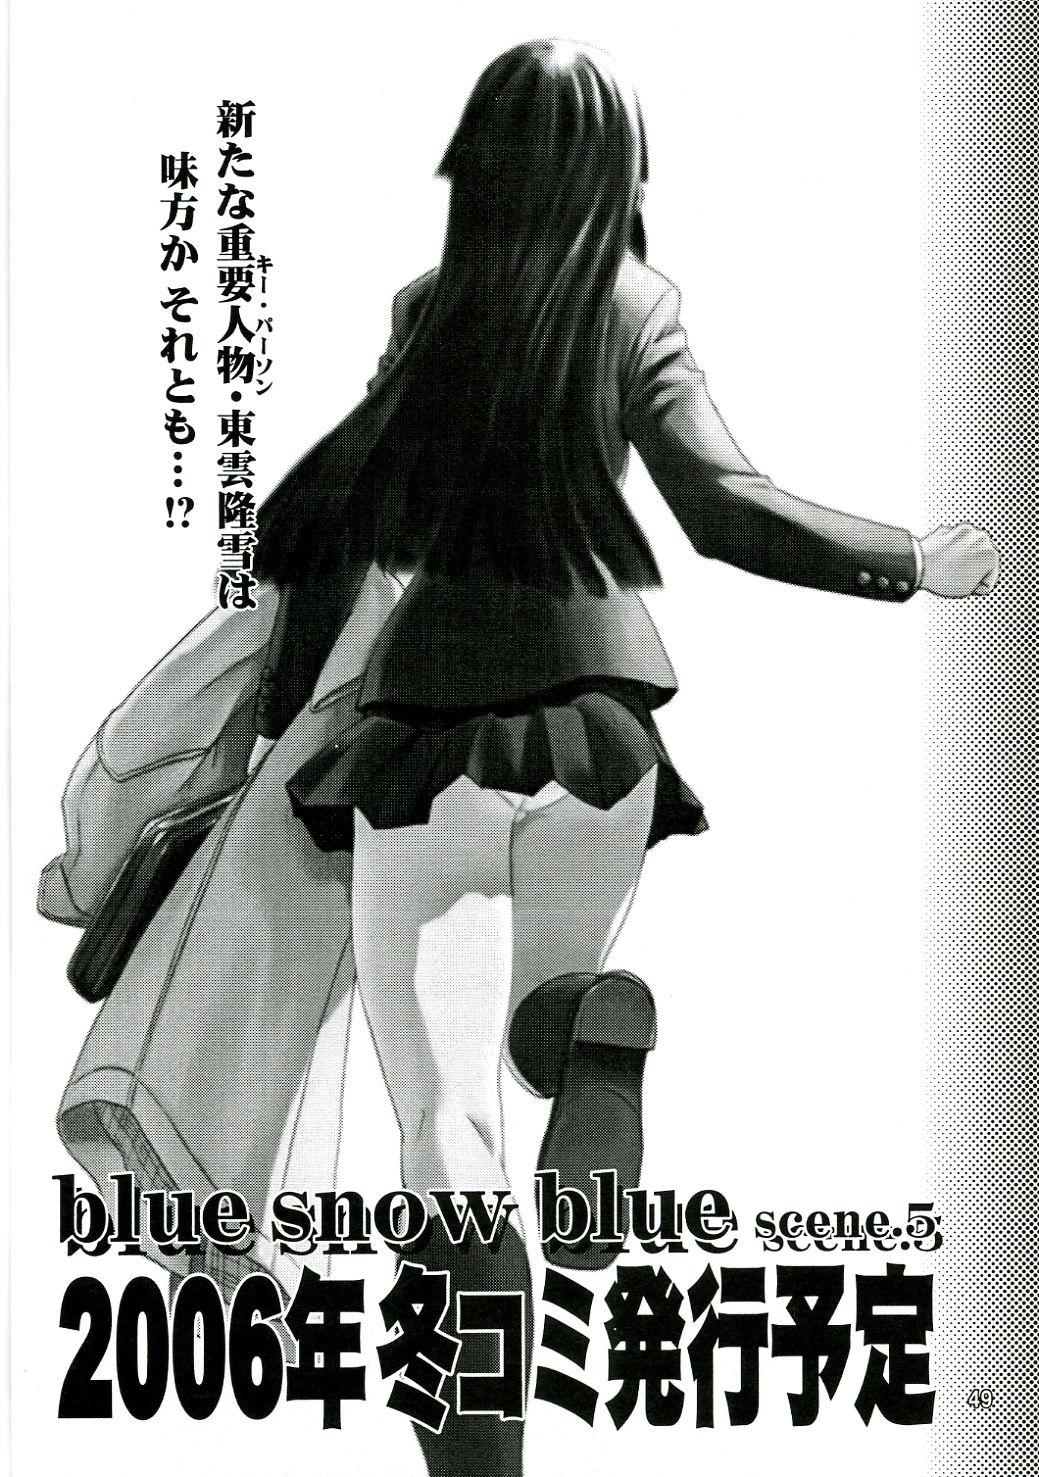 blue snow blue - scene.4 47